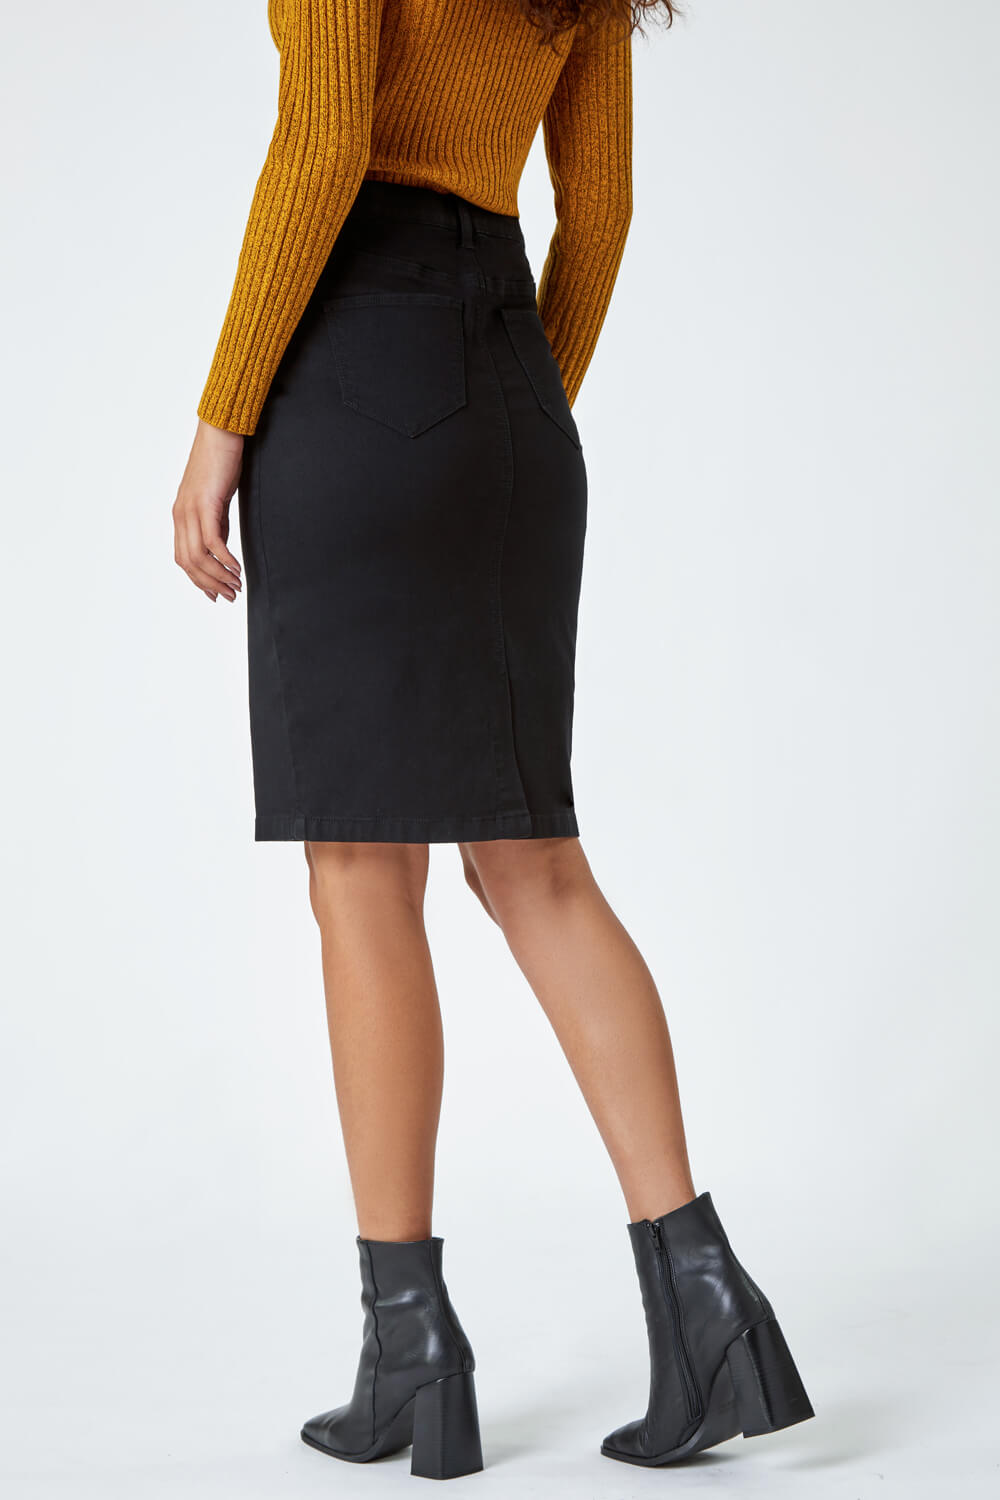 Black Cotton Denim Stretch Skirt, Image 3 of 5